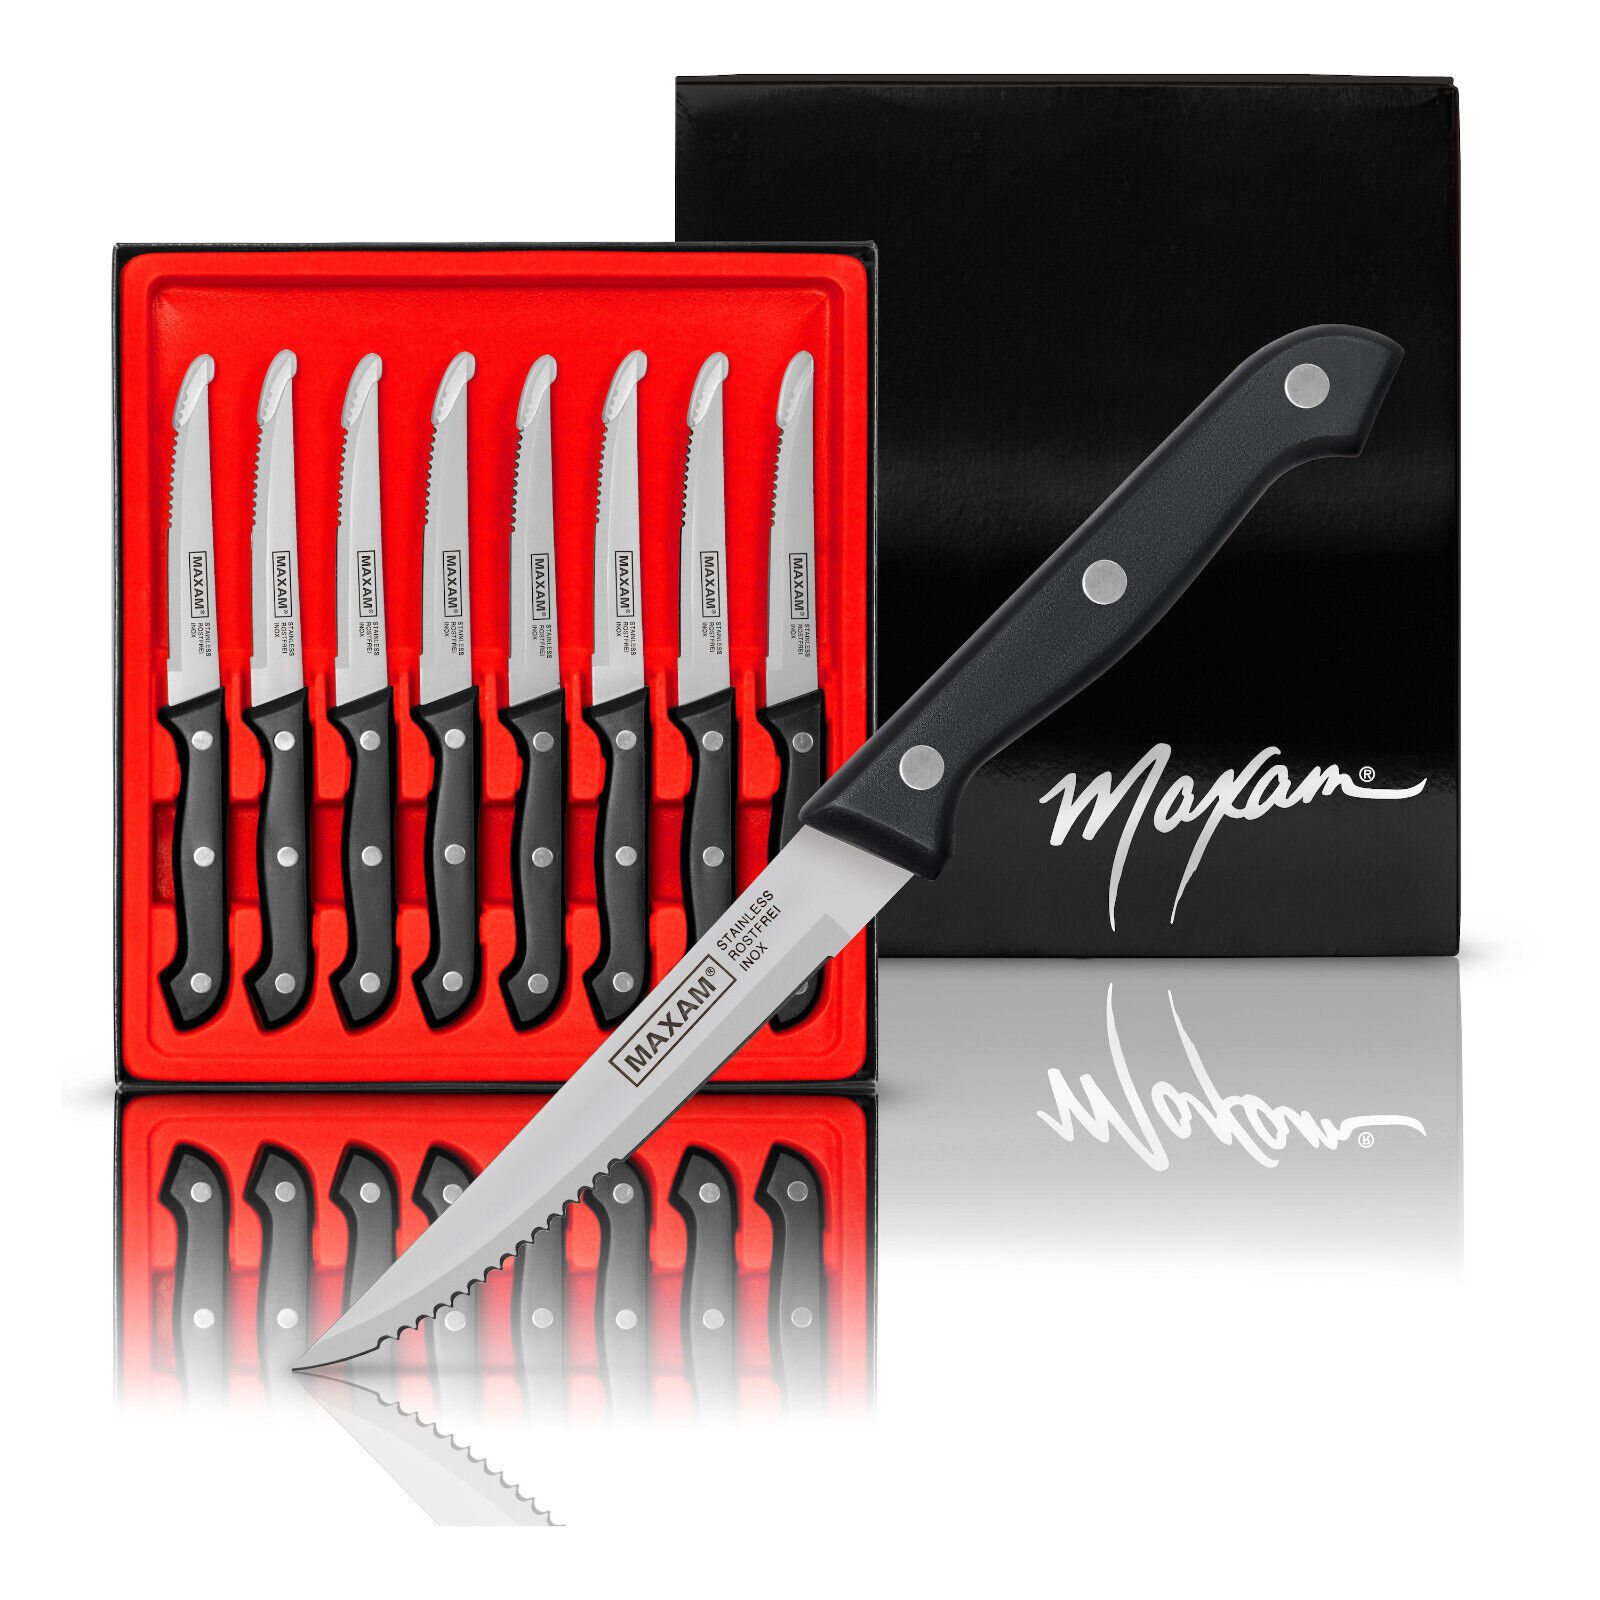 Maxam 8-Piece Steak Knife Set - 8 7/8 Inch Stainless Steel Serrated Blade, Sharp